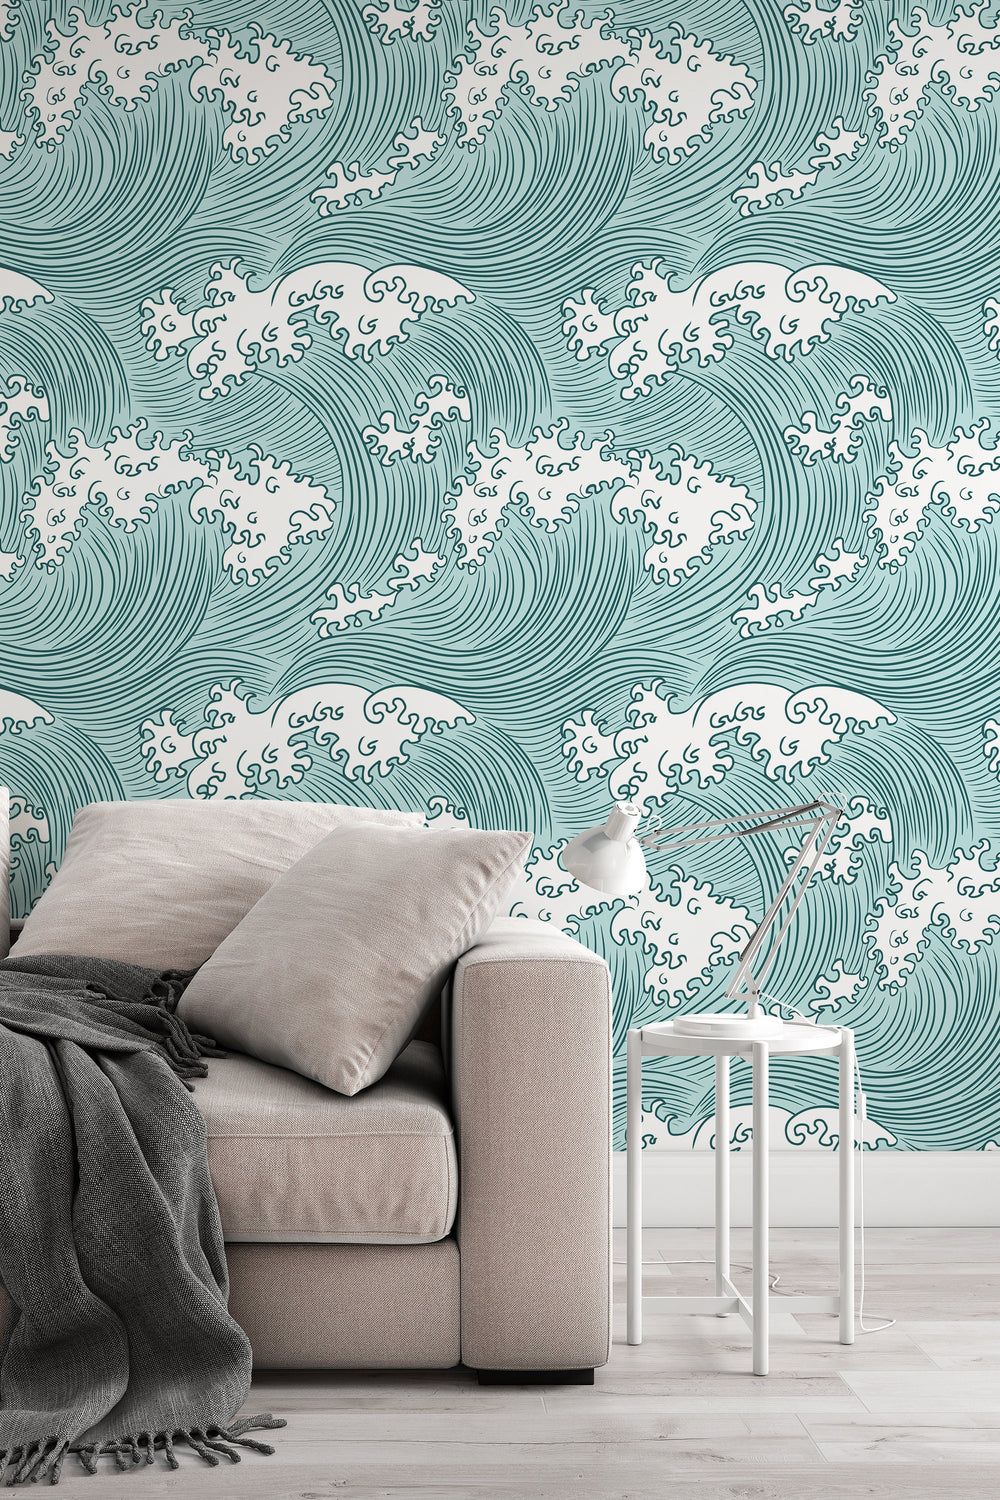 abstract ocean wallpaper